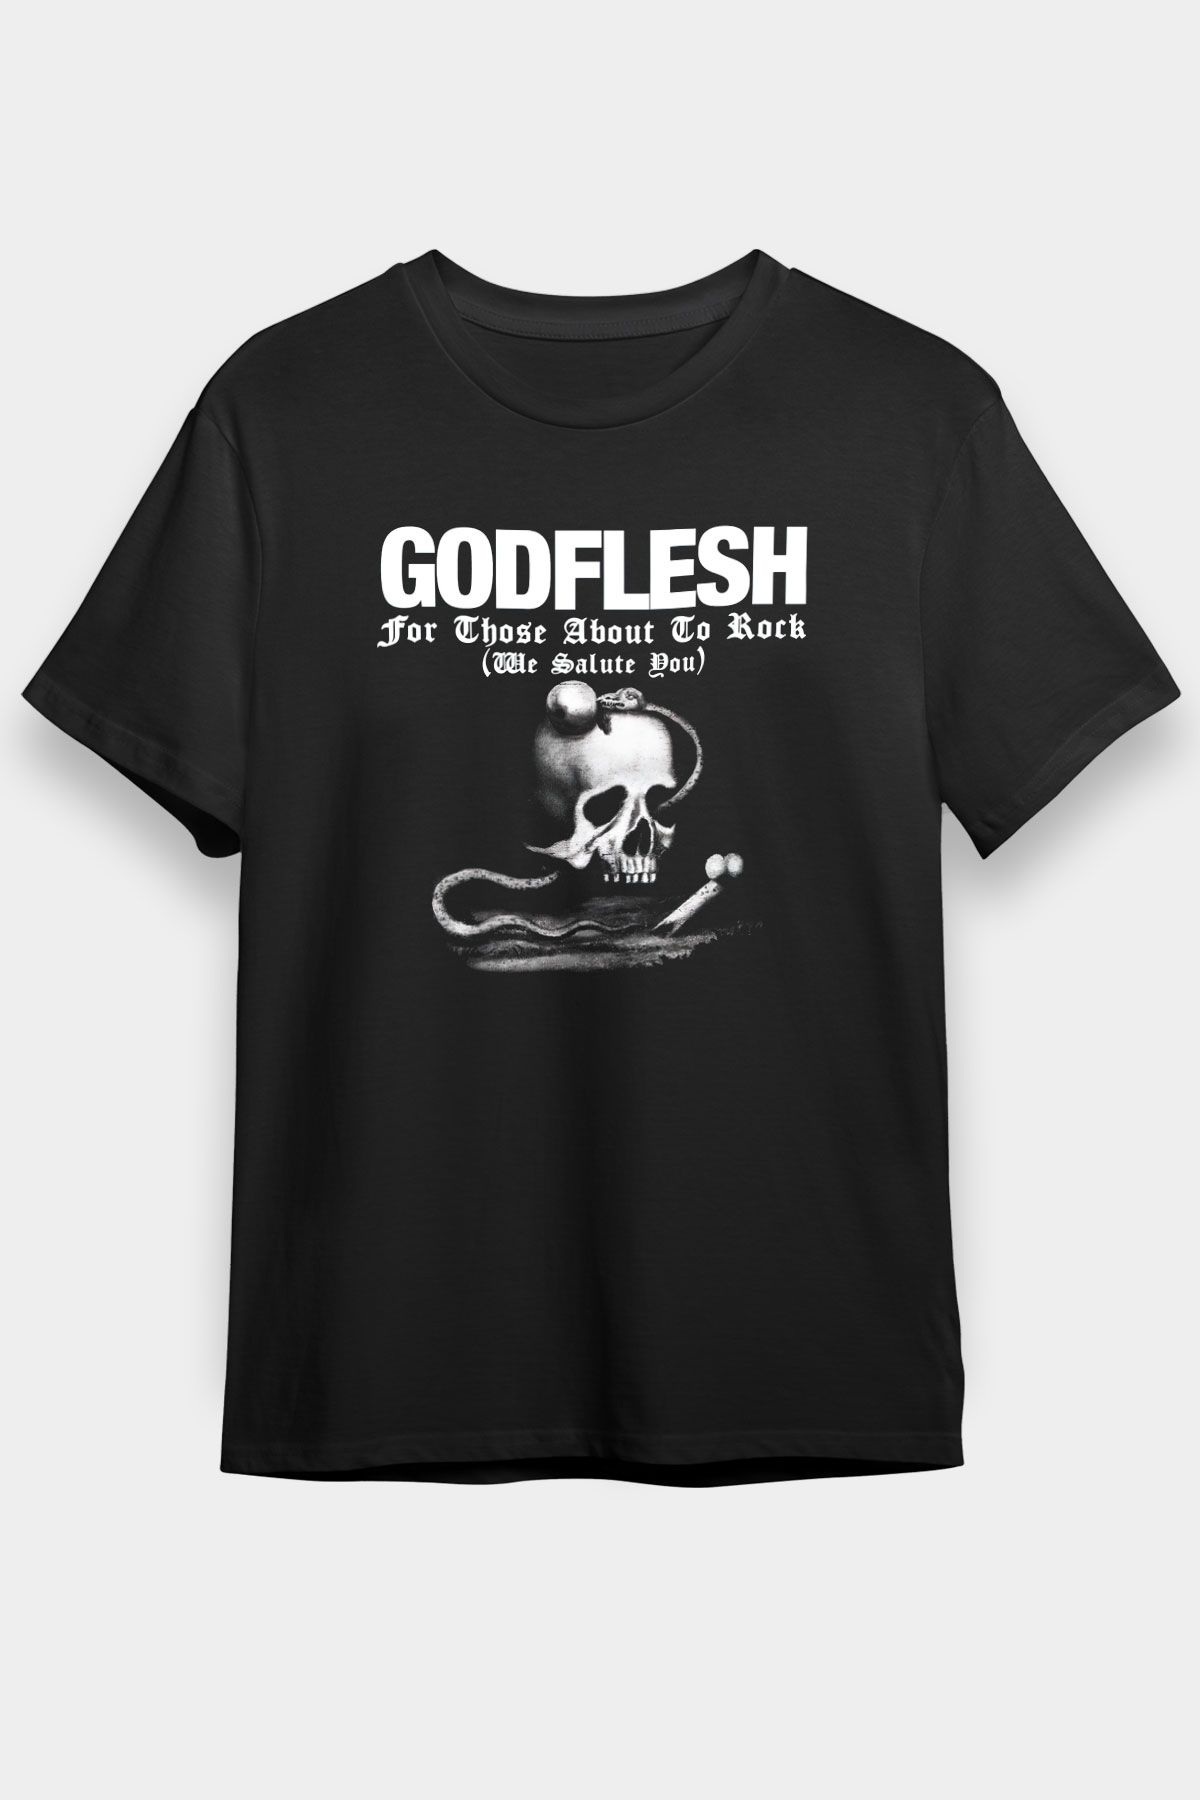 Godflesh T shirt, Music Band ,Unisex Tshirt 08/